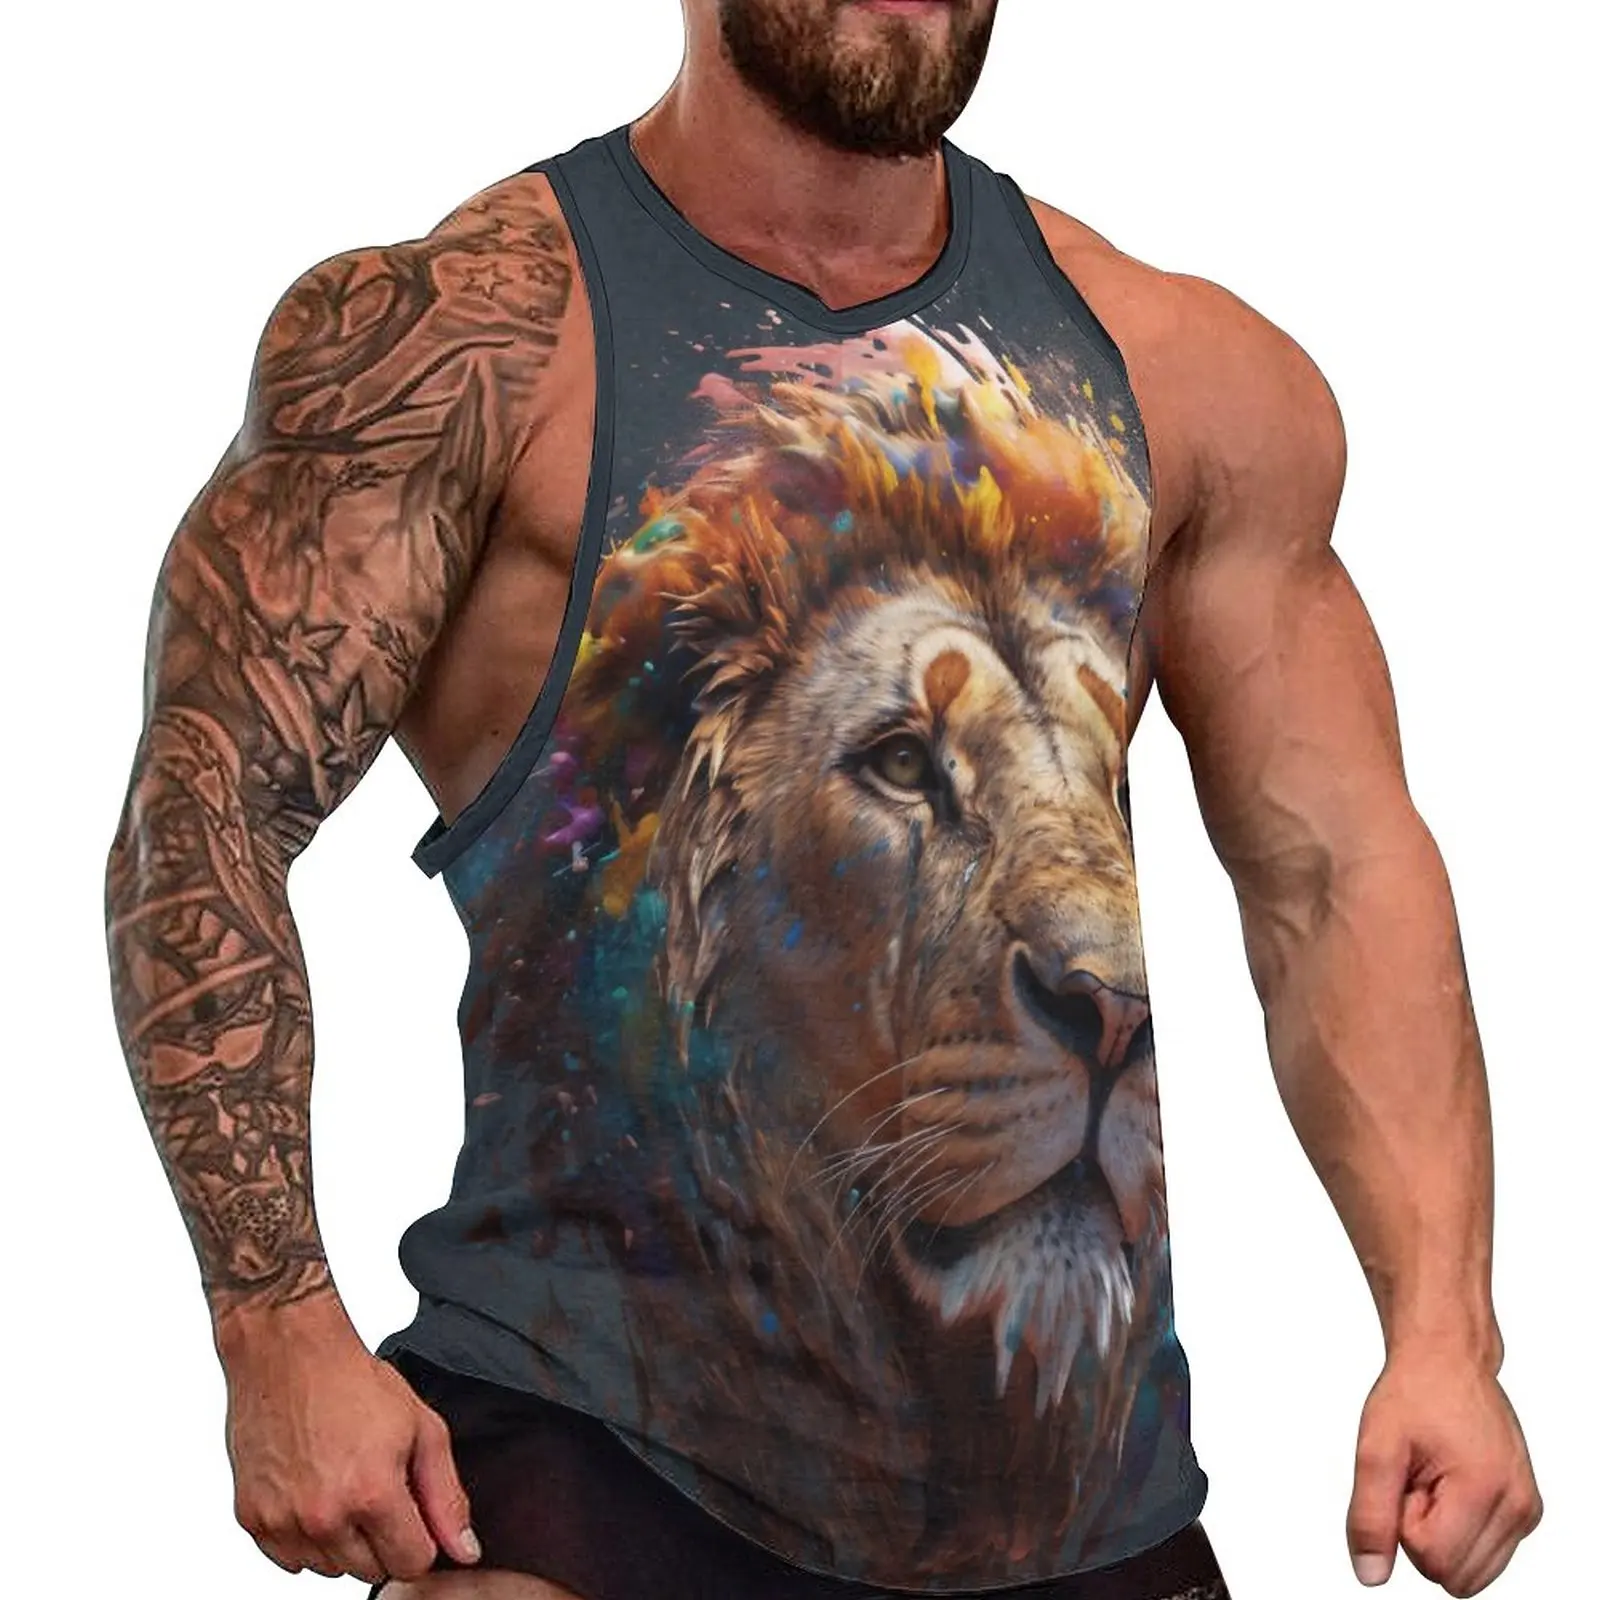 

Lion Tank Top Man's Liquid Splash Explosion Workout Oversize Tops Summer Muscle Graphic Sleeveless Vests